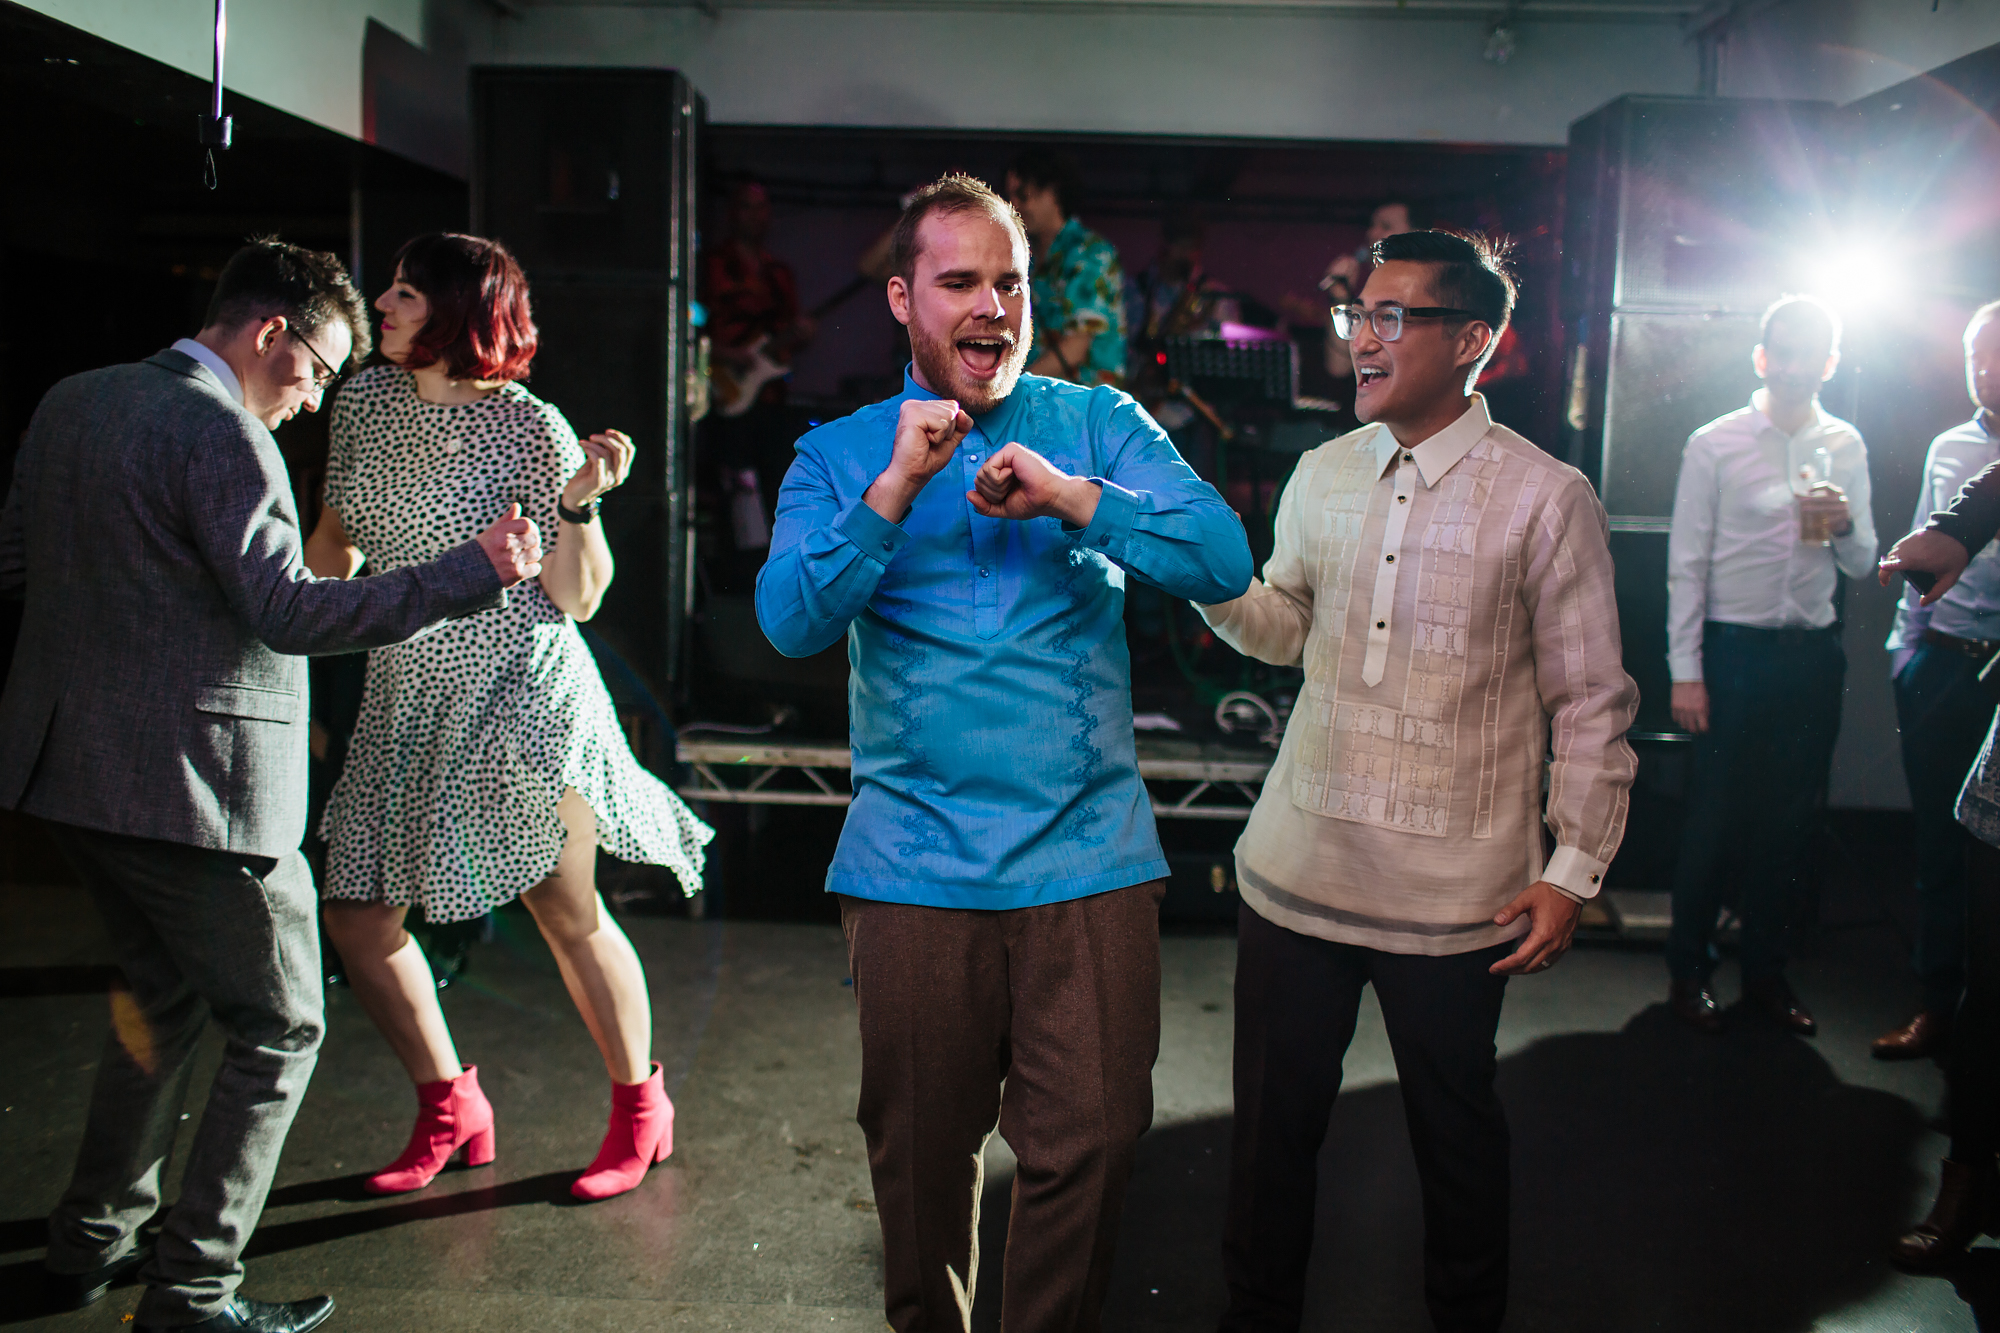 Grooms dancing at a gay wedding in Leeds